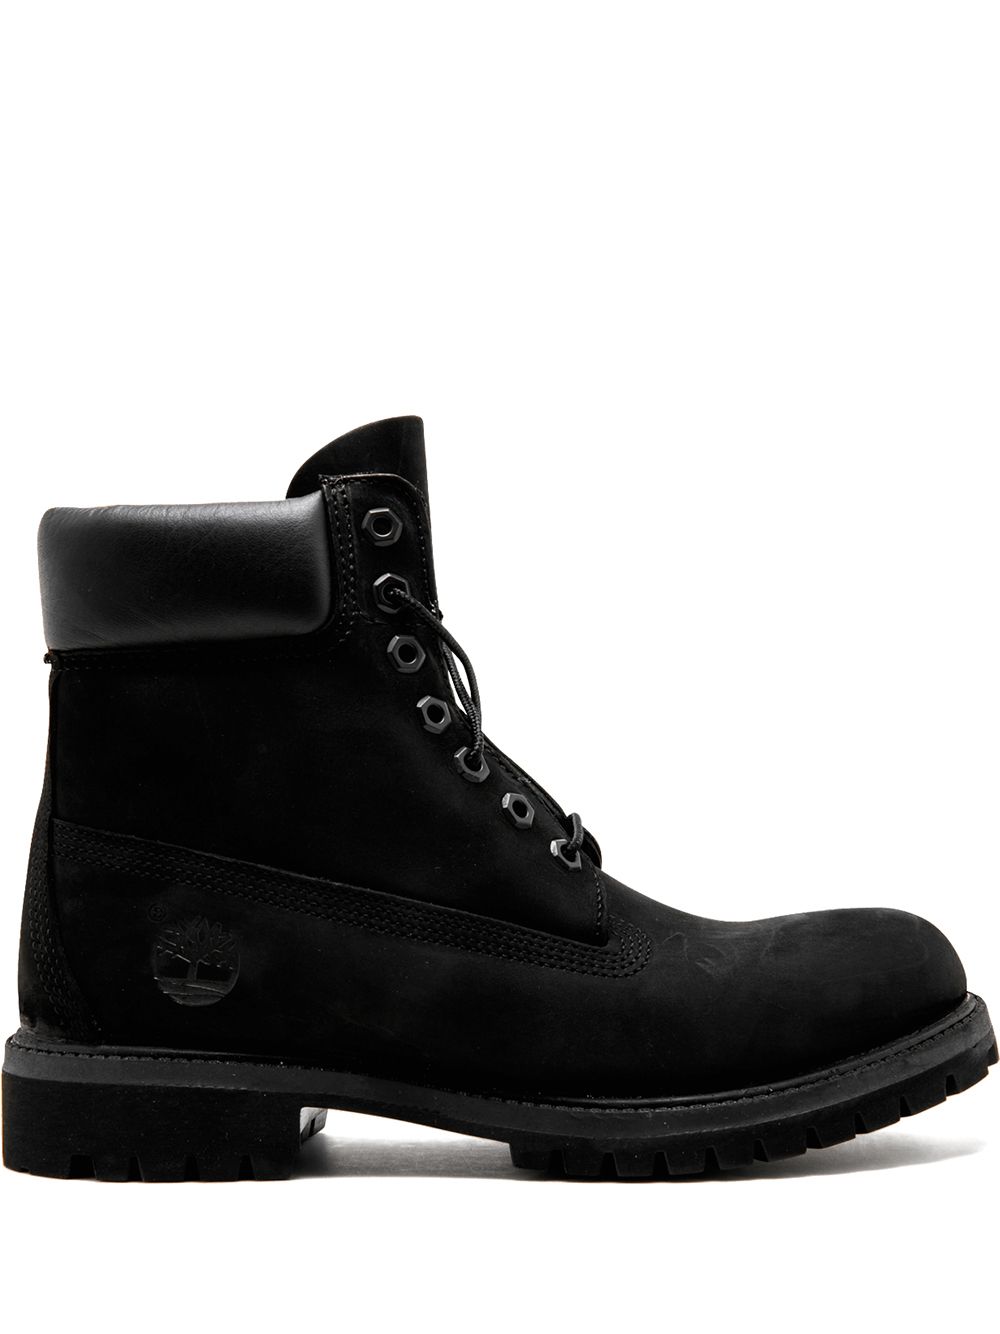 Timberland 6 Inch waterproof boots - Black von Timberland